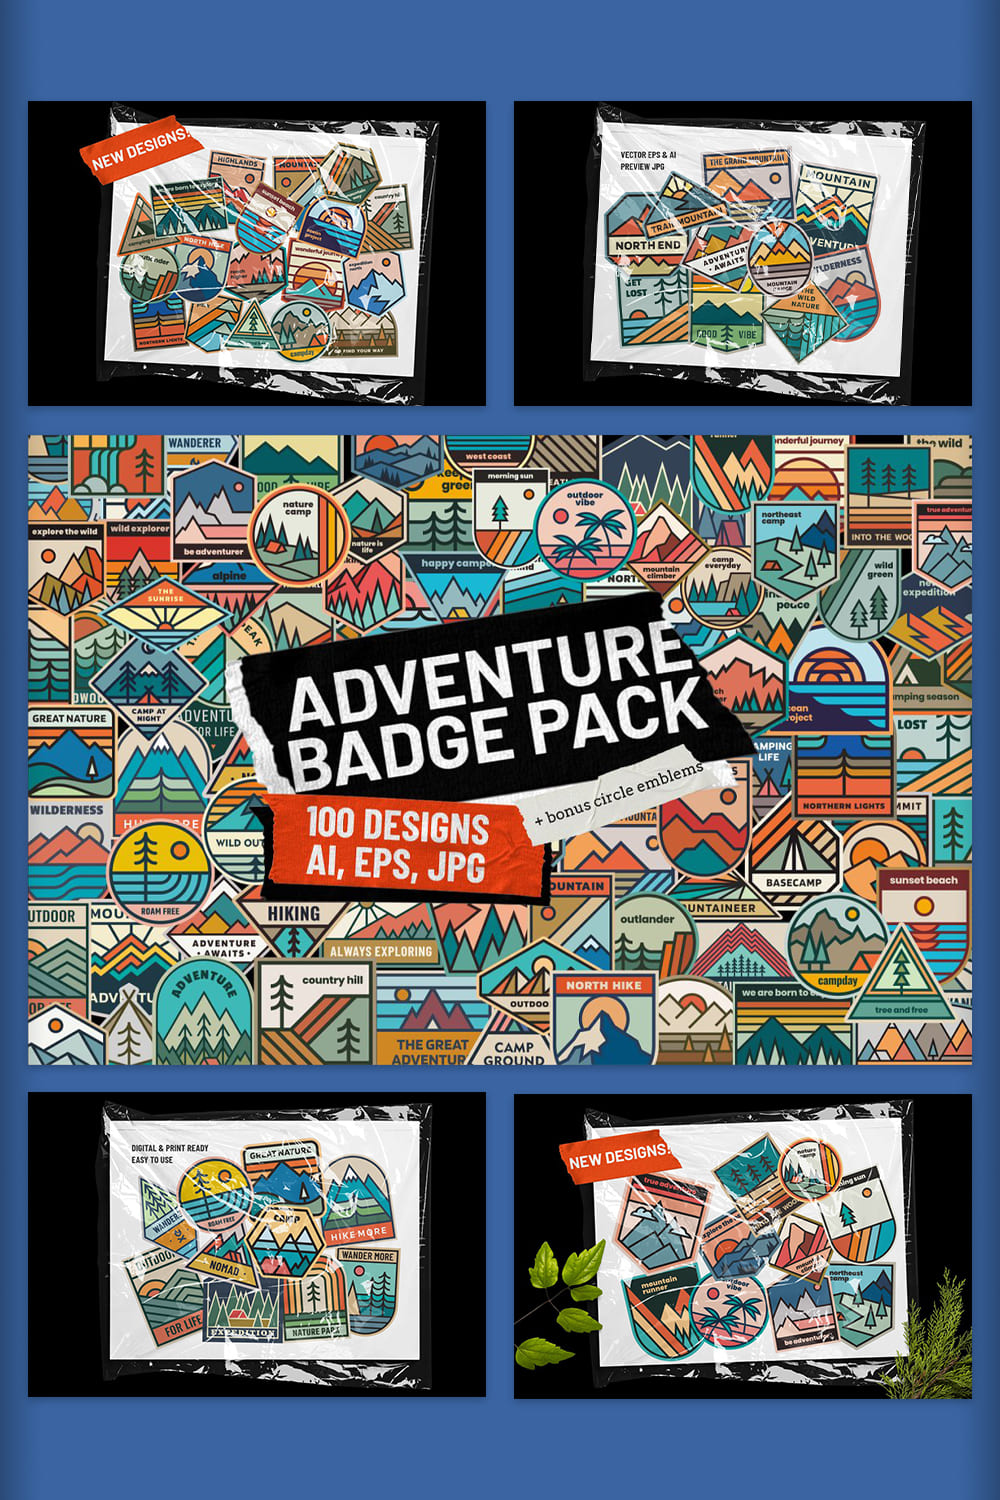 Adventure Badge Pack Pinterest image.